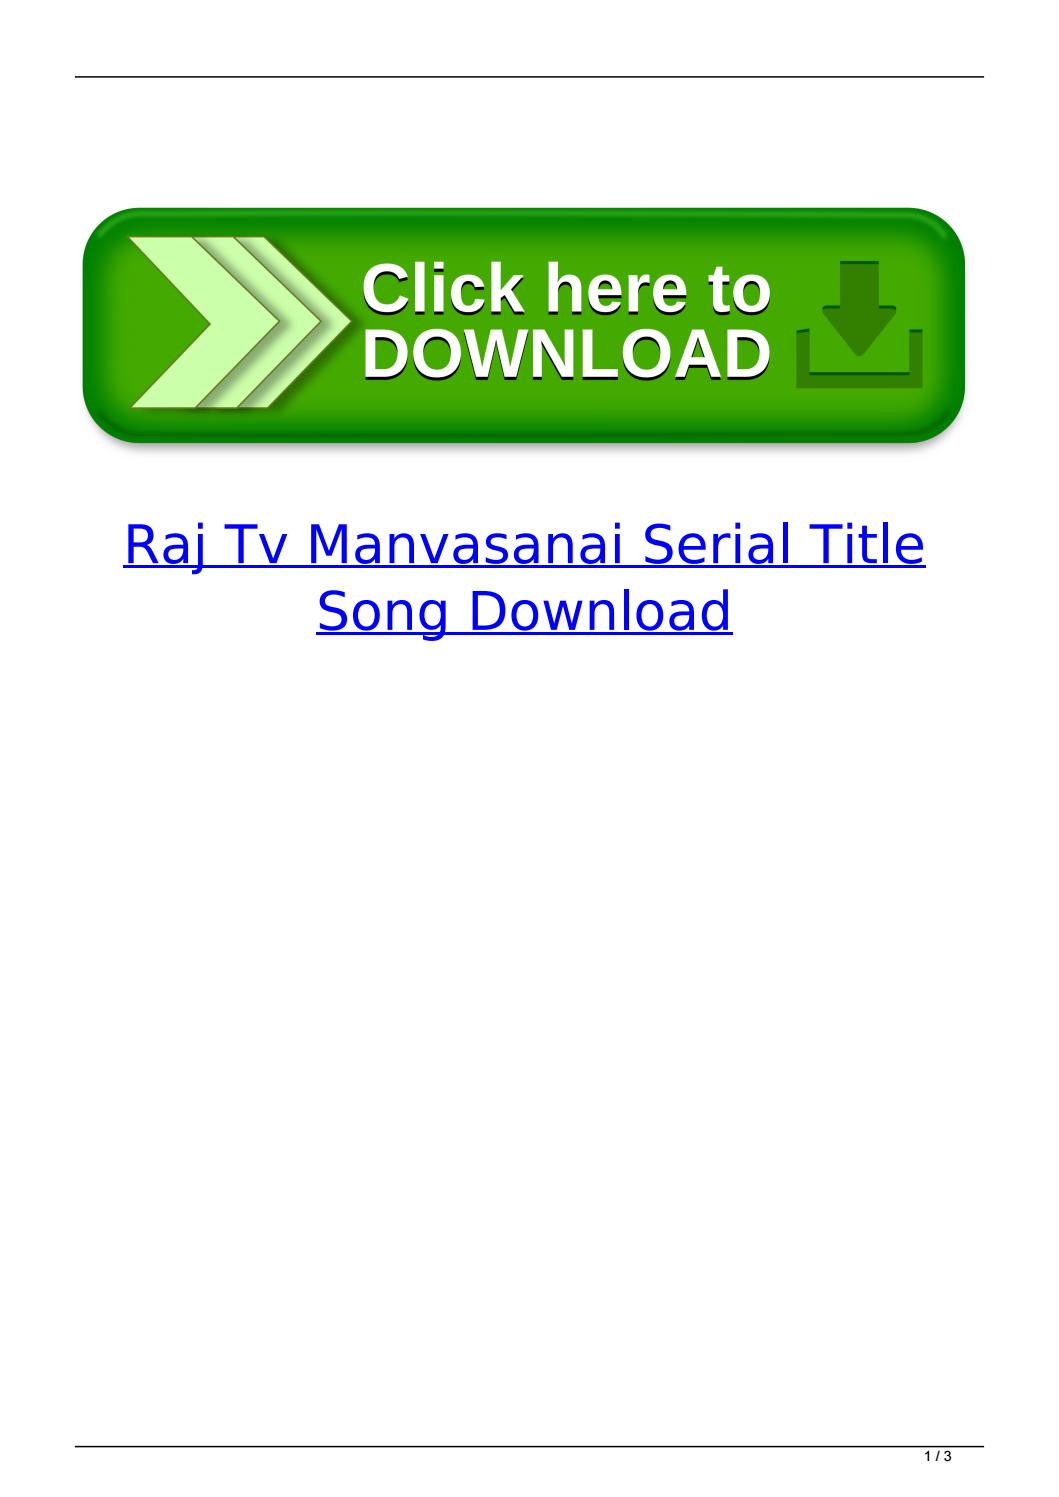 Raj Tv Manvasanai Serial Song Free Download